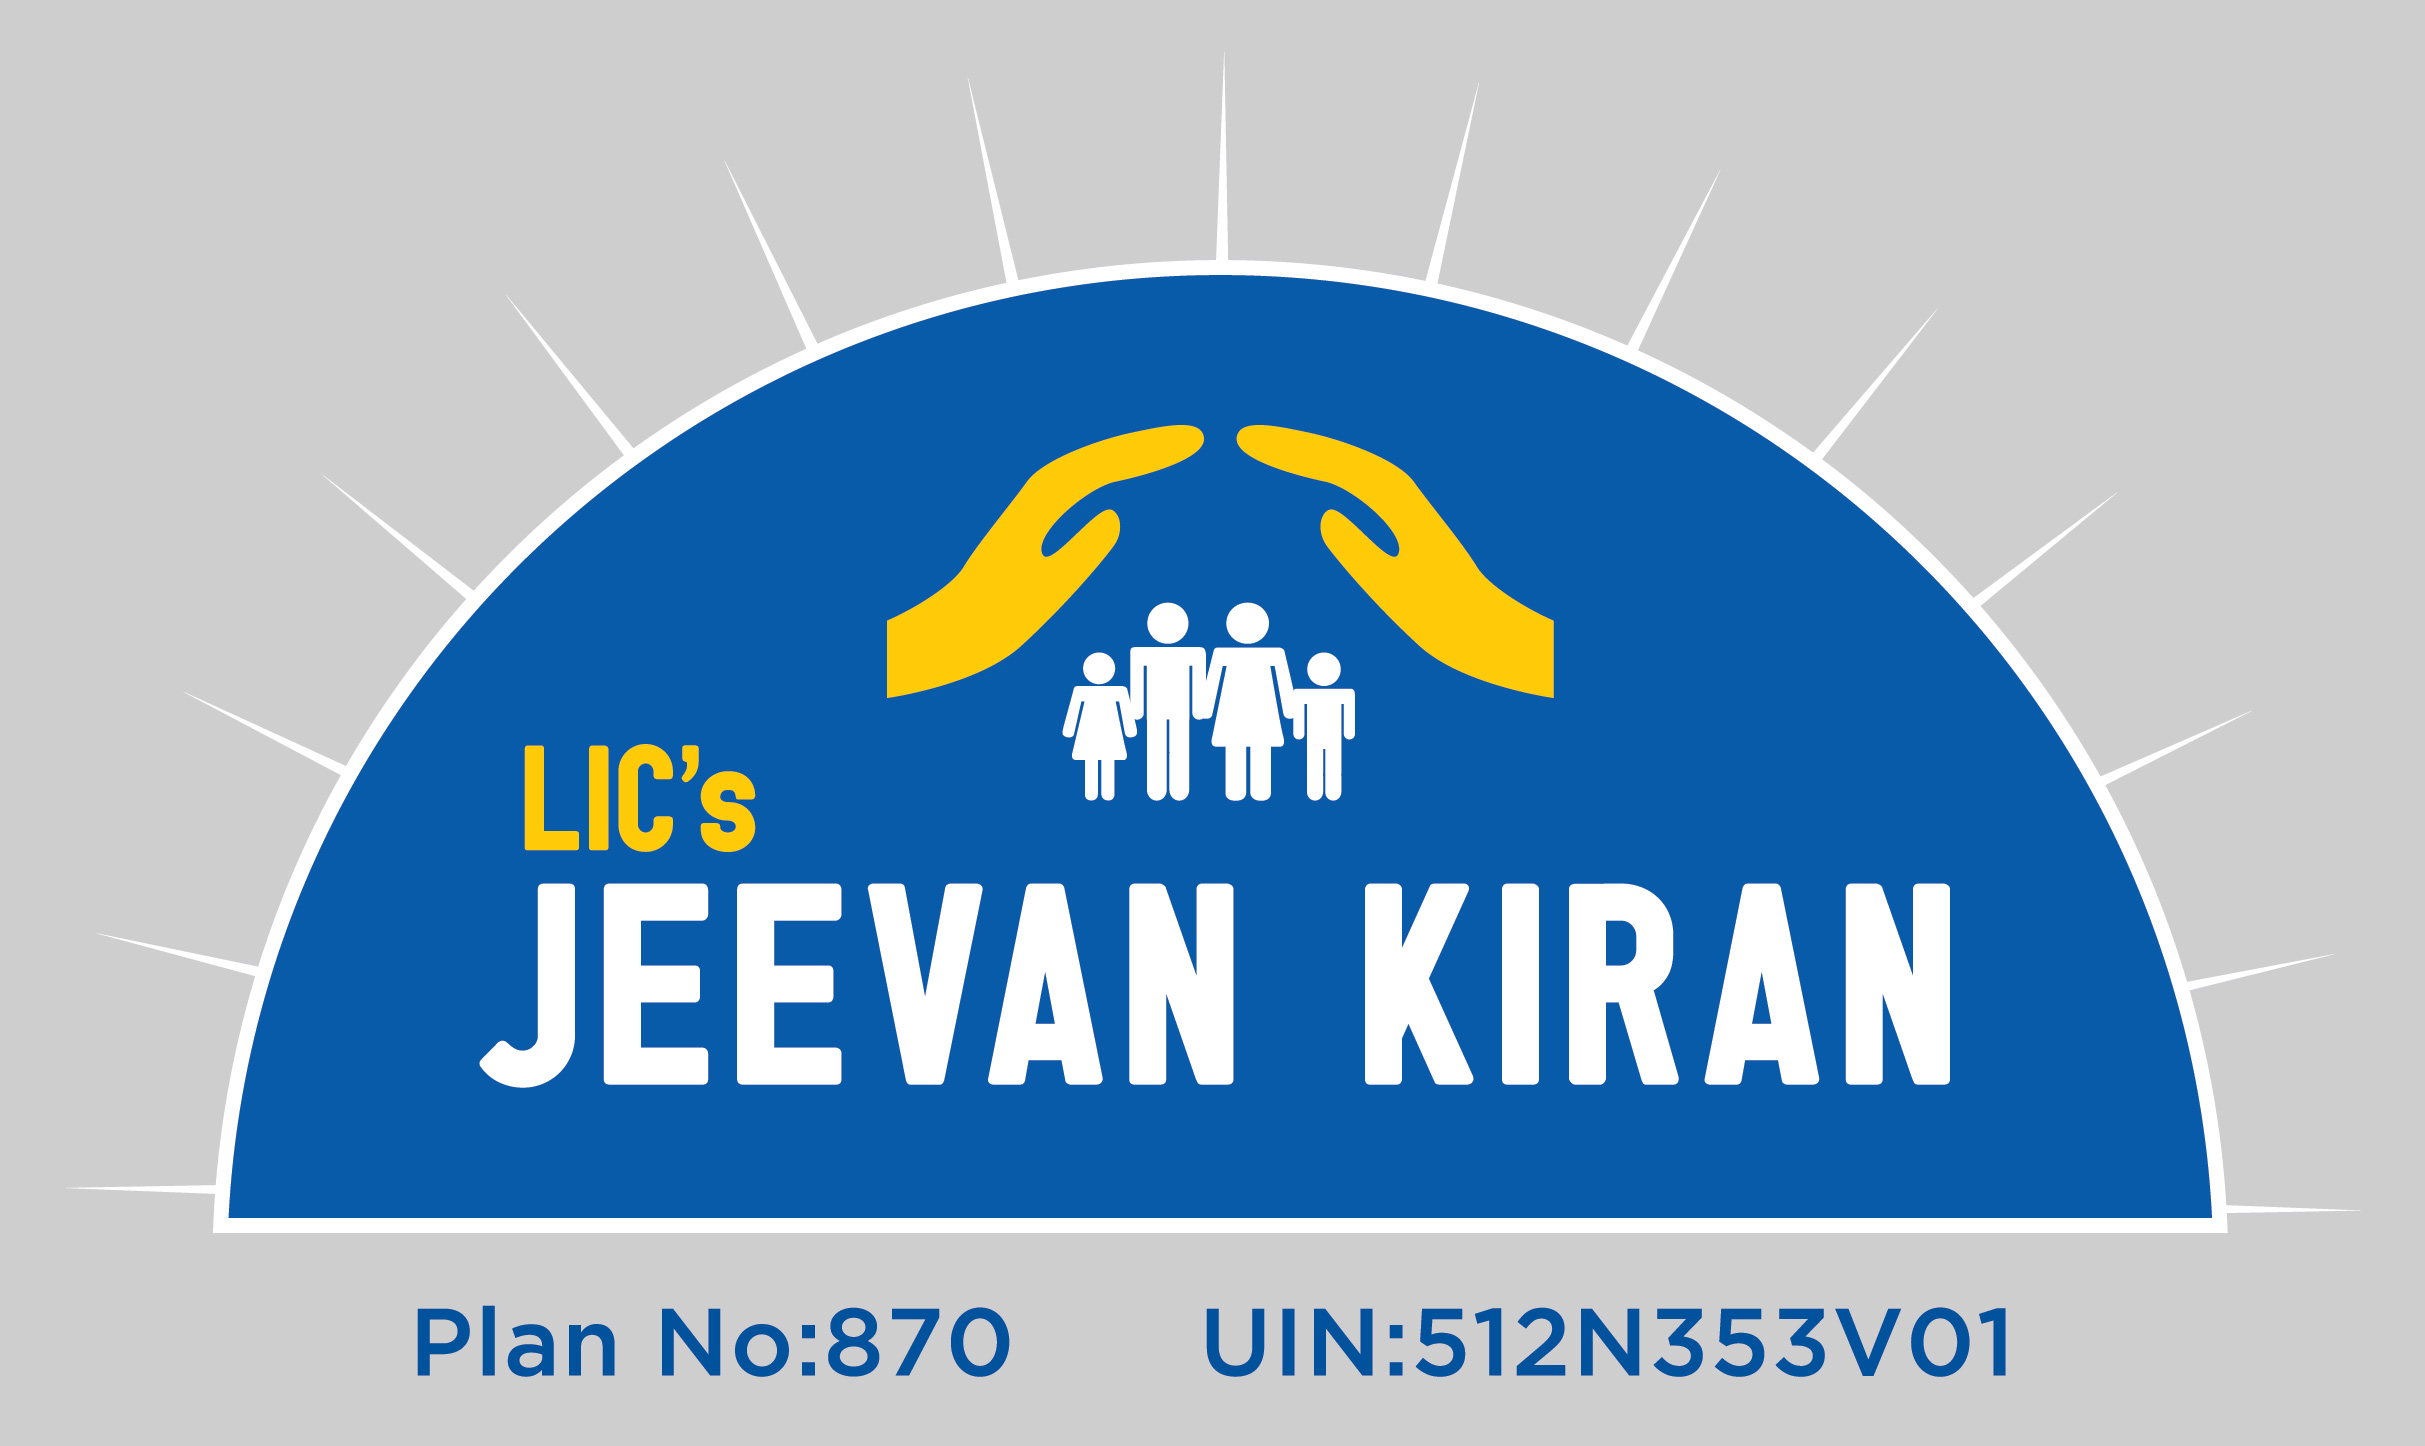 Image of LIC's Jeevan Kiran